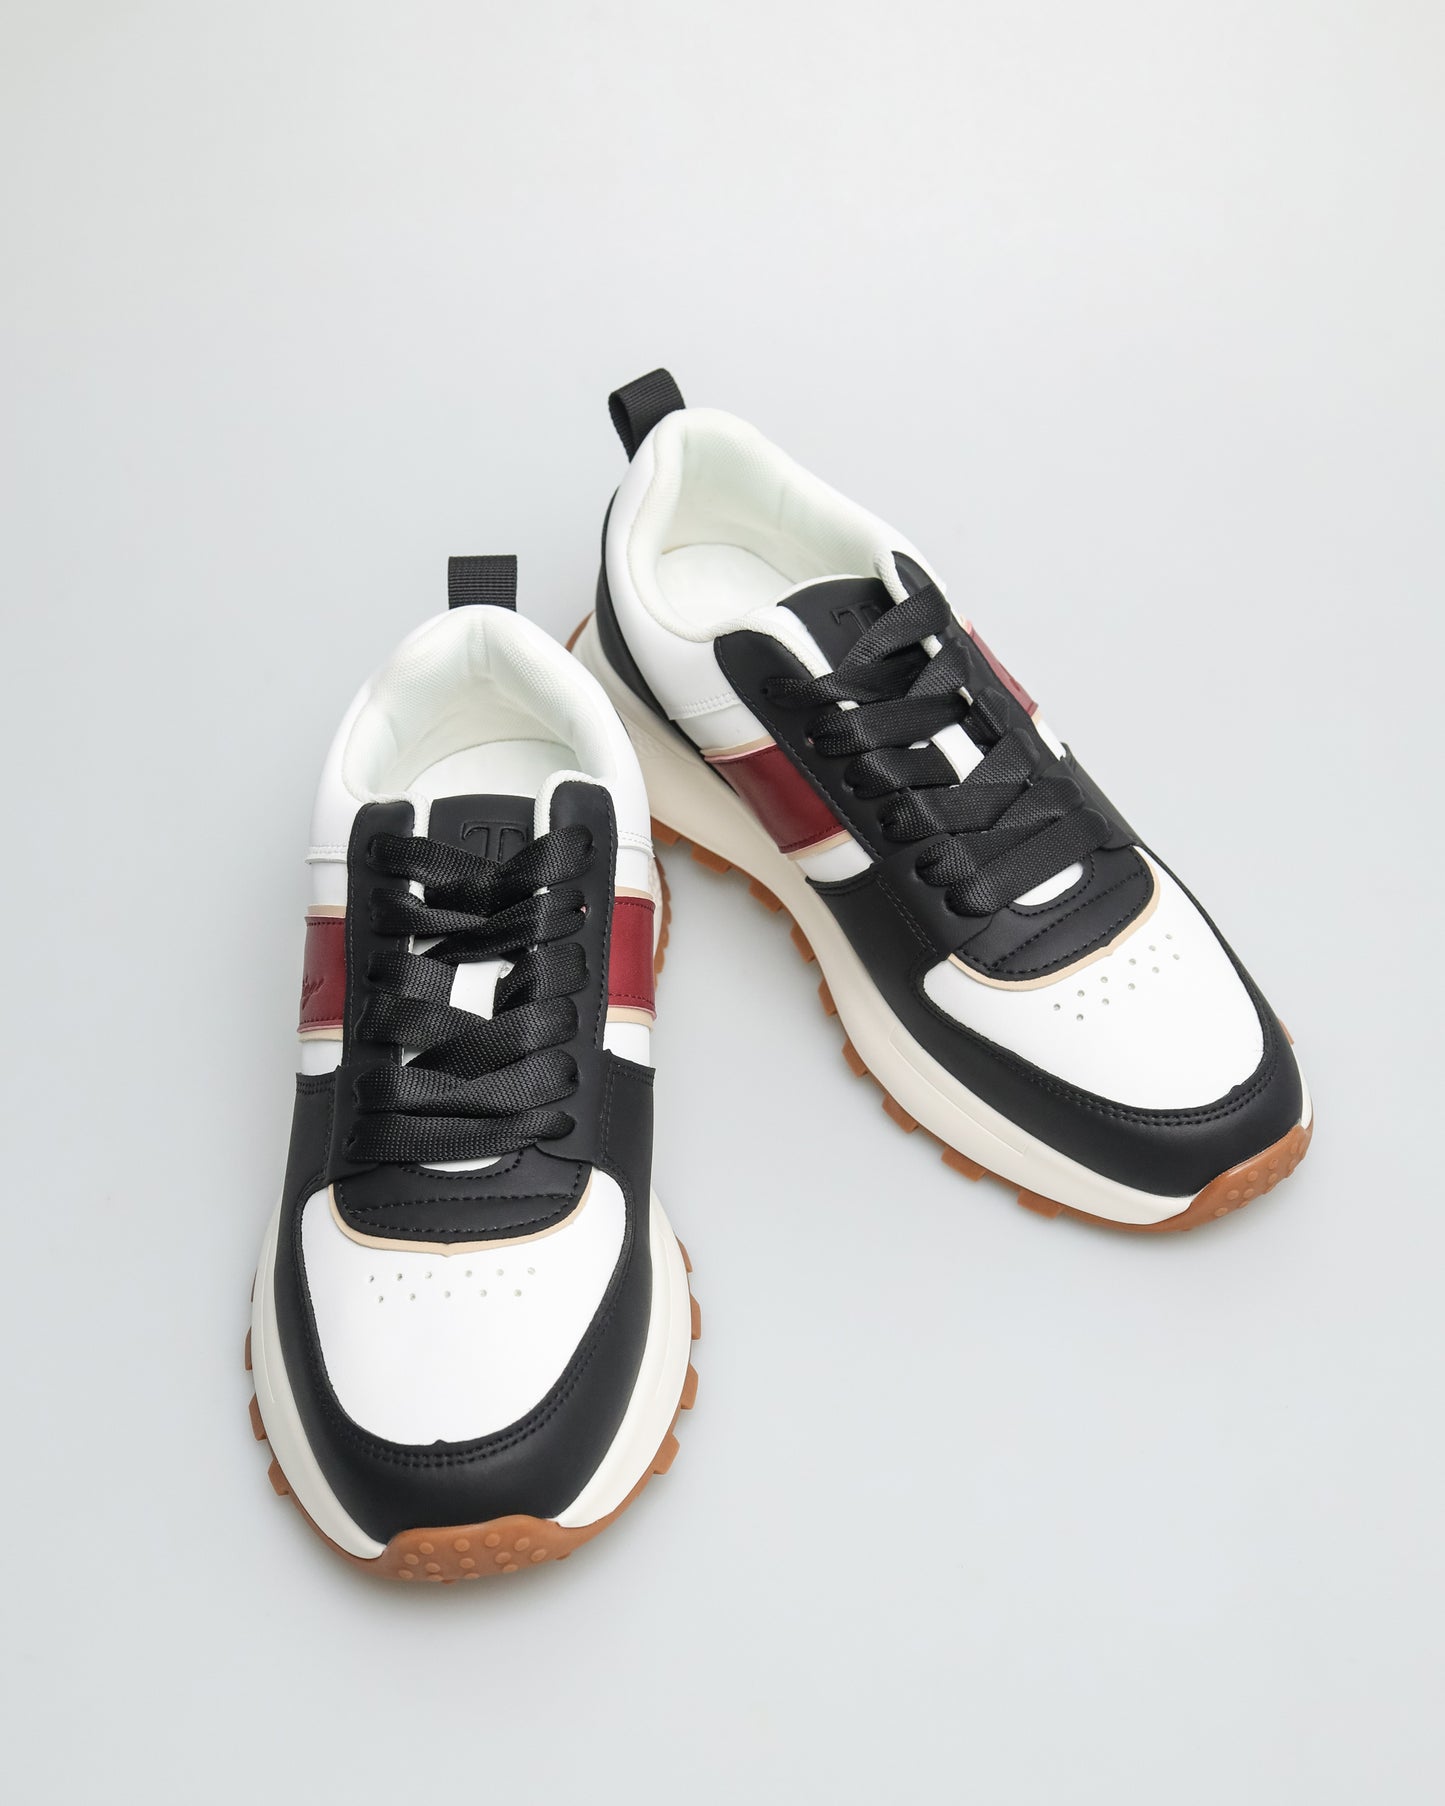 Tomaz TY021 Men's Sneakers (Black/White/Red)